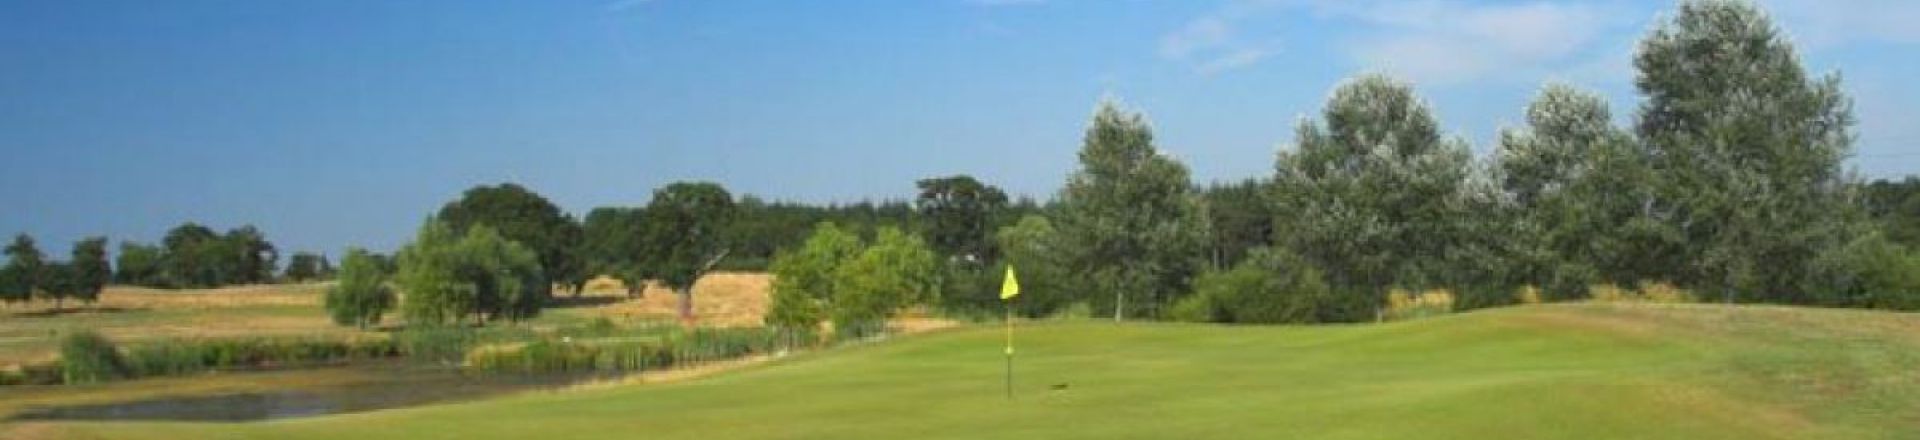 Wokefield Golf Course at Wokefield Estate Golf Club